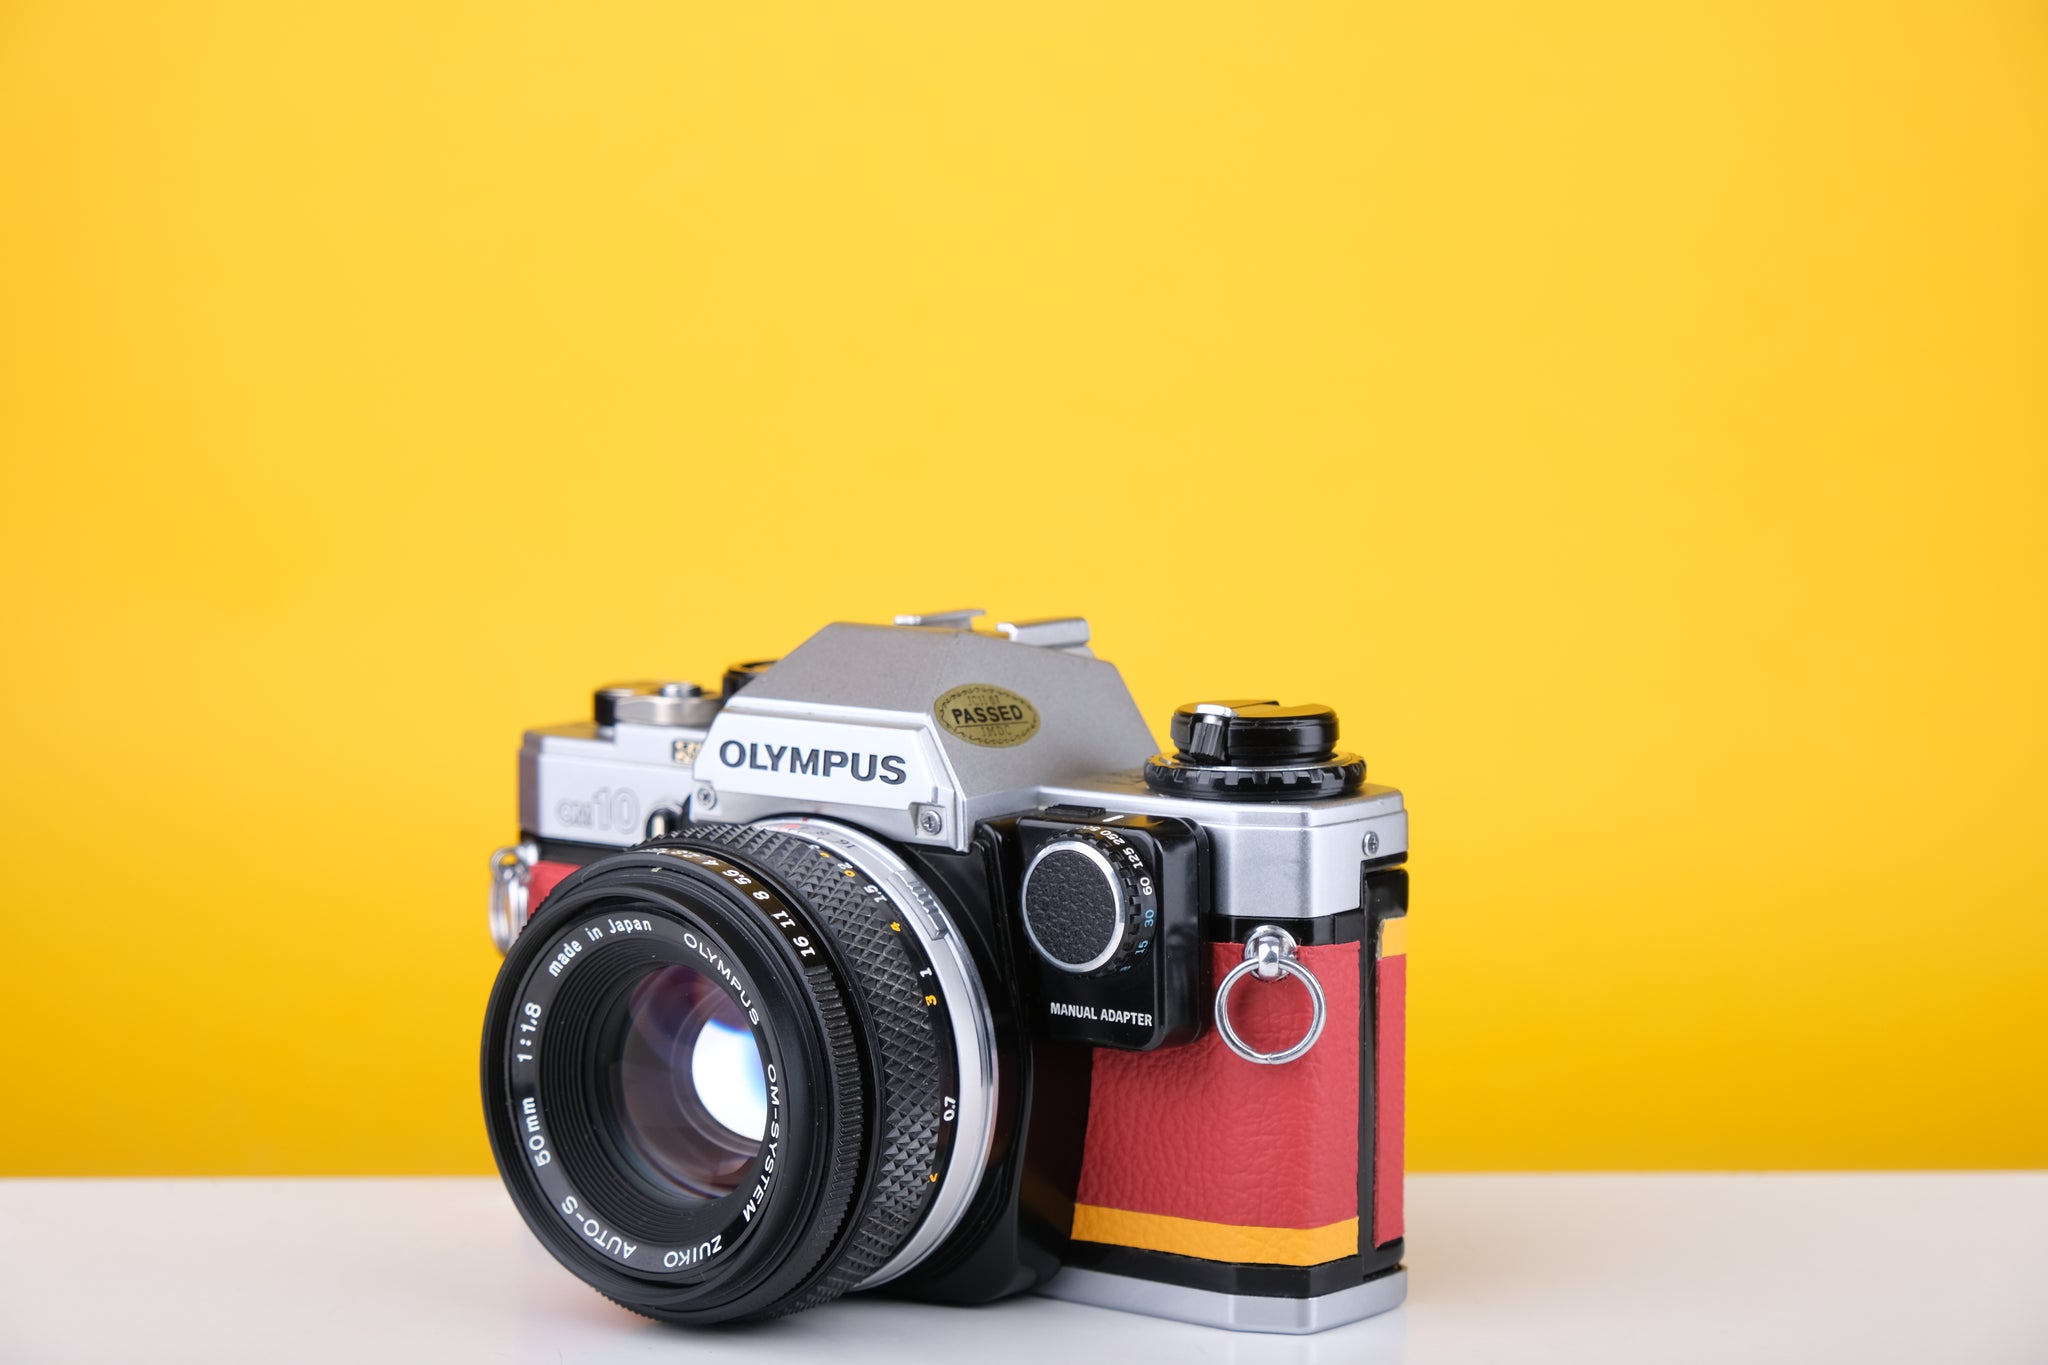 Olympus OM10 Slr Vintage 35mm Film Camera with Zuiko 50mm f1.8